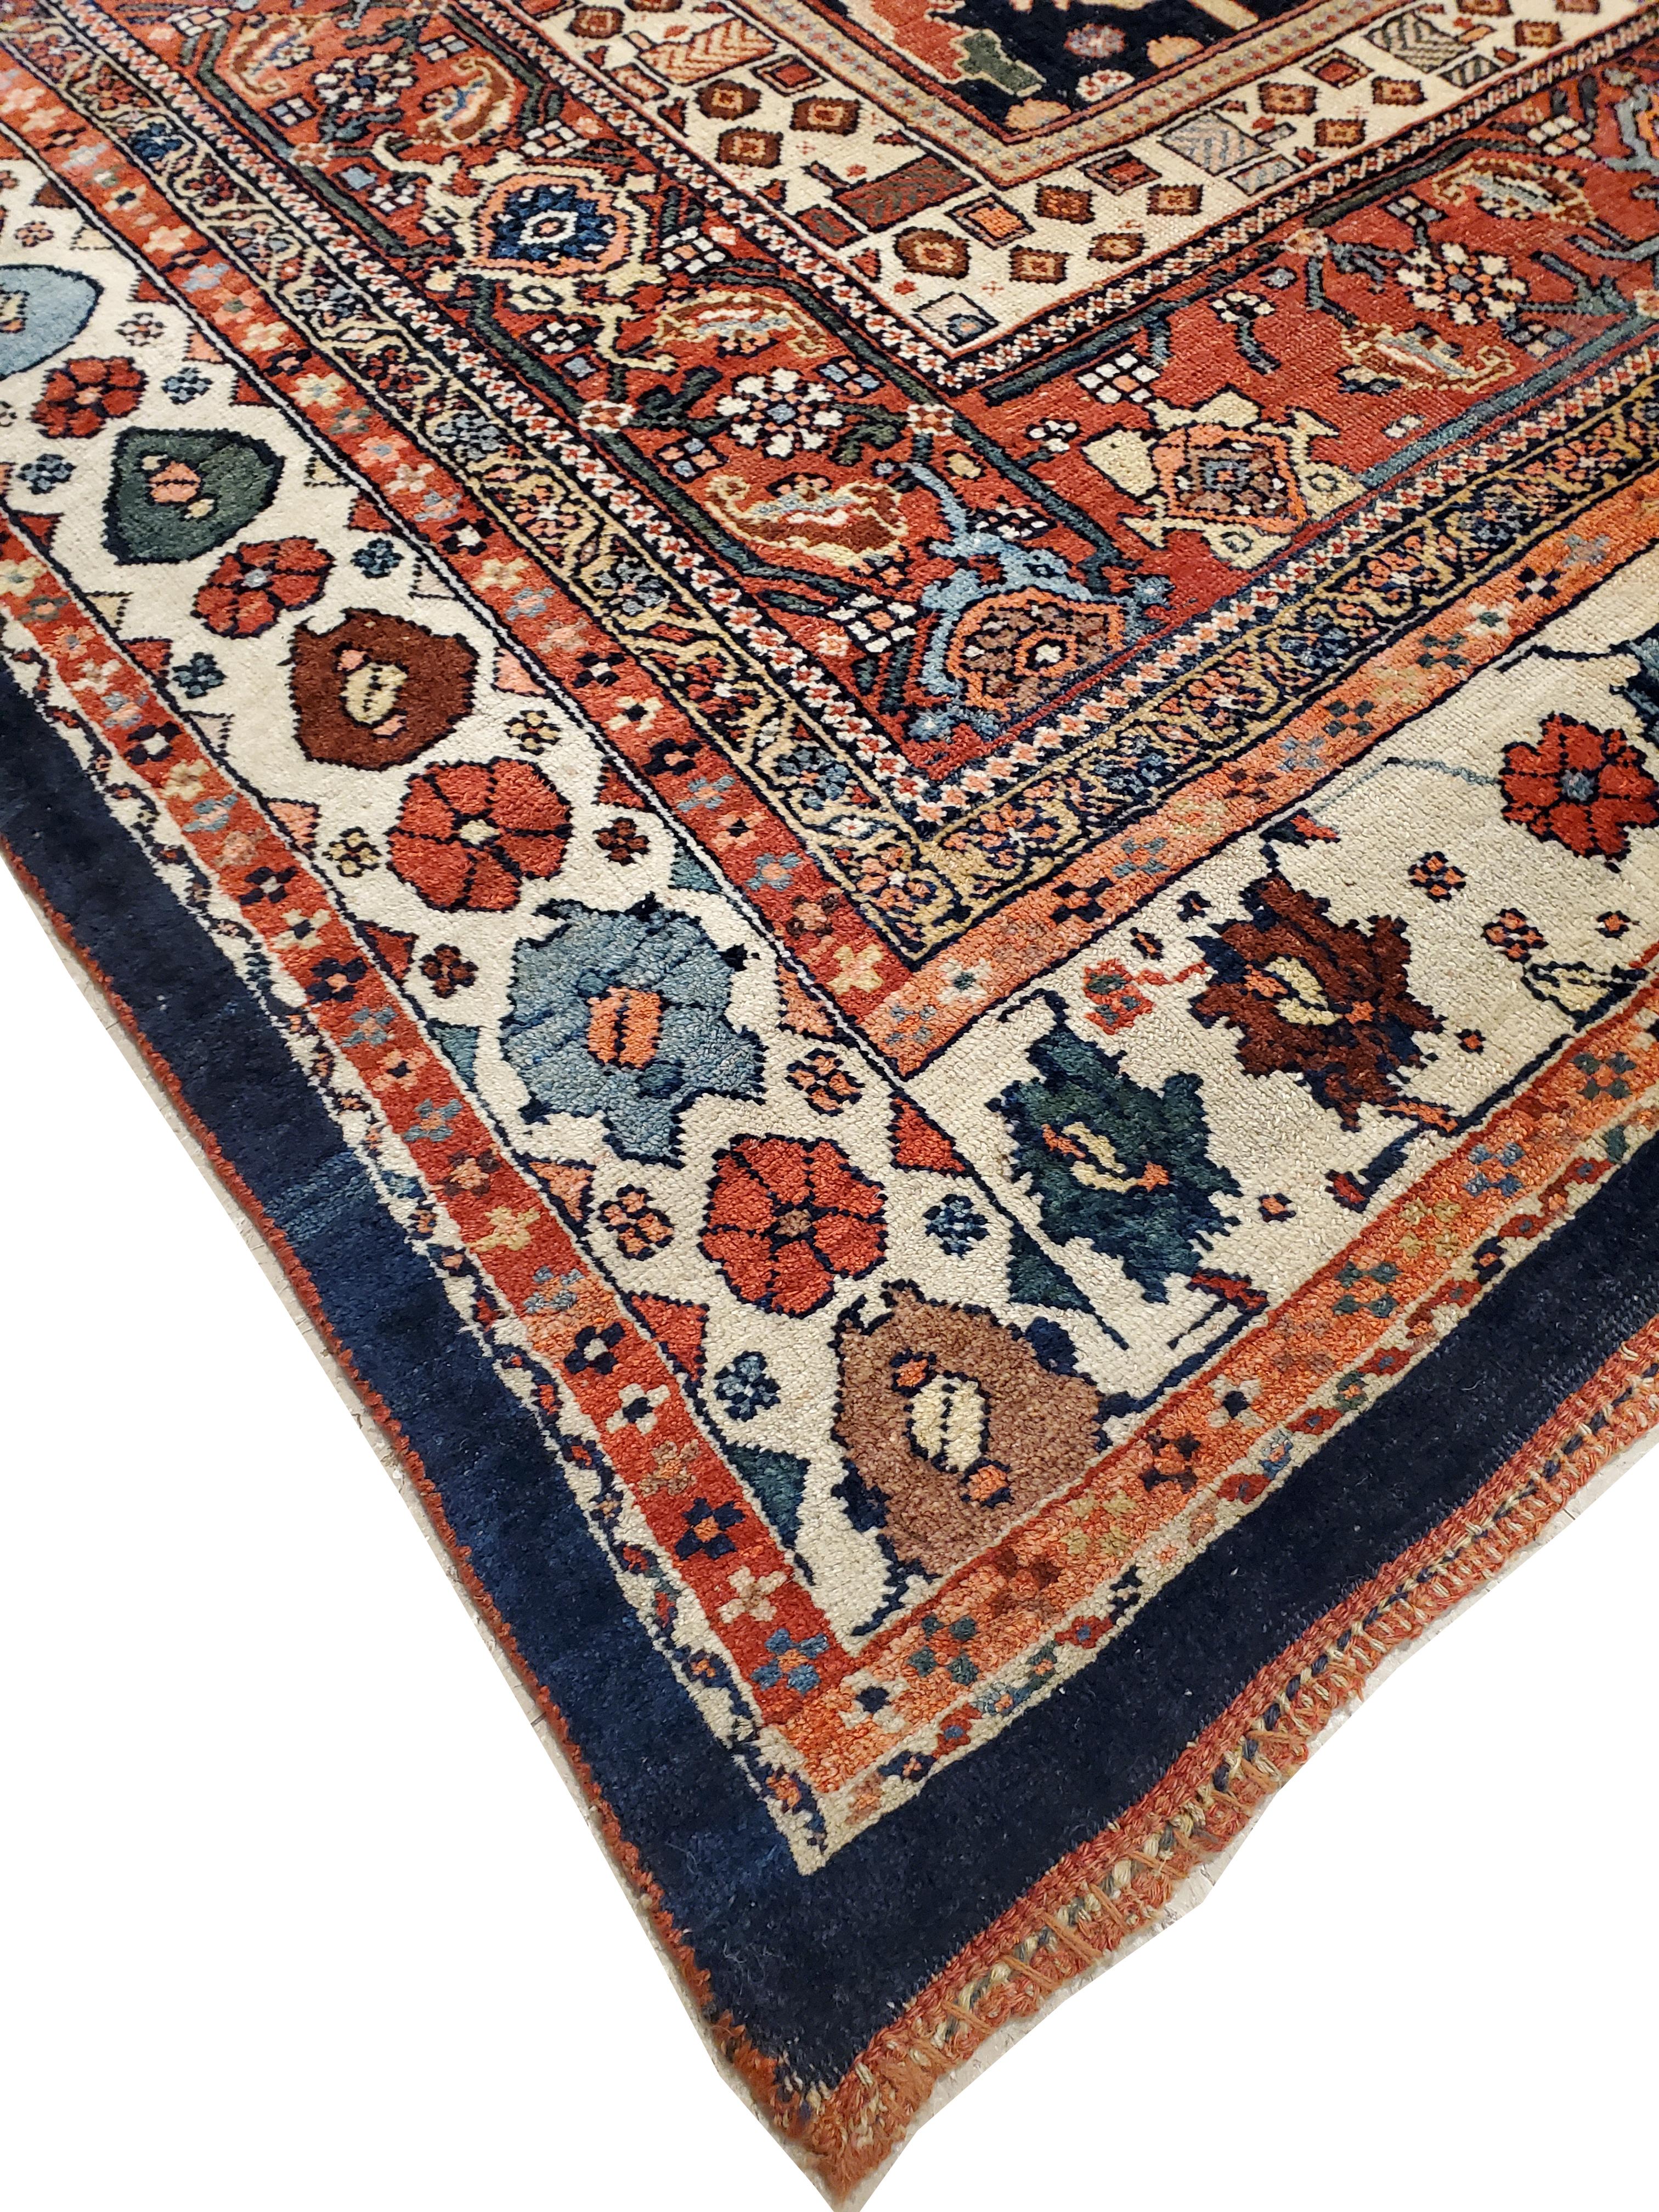 Sultanabad Antique Bijar Carpet Oriental Carpet, Handmade, Navy, Red, Light Blue and Green For Sale